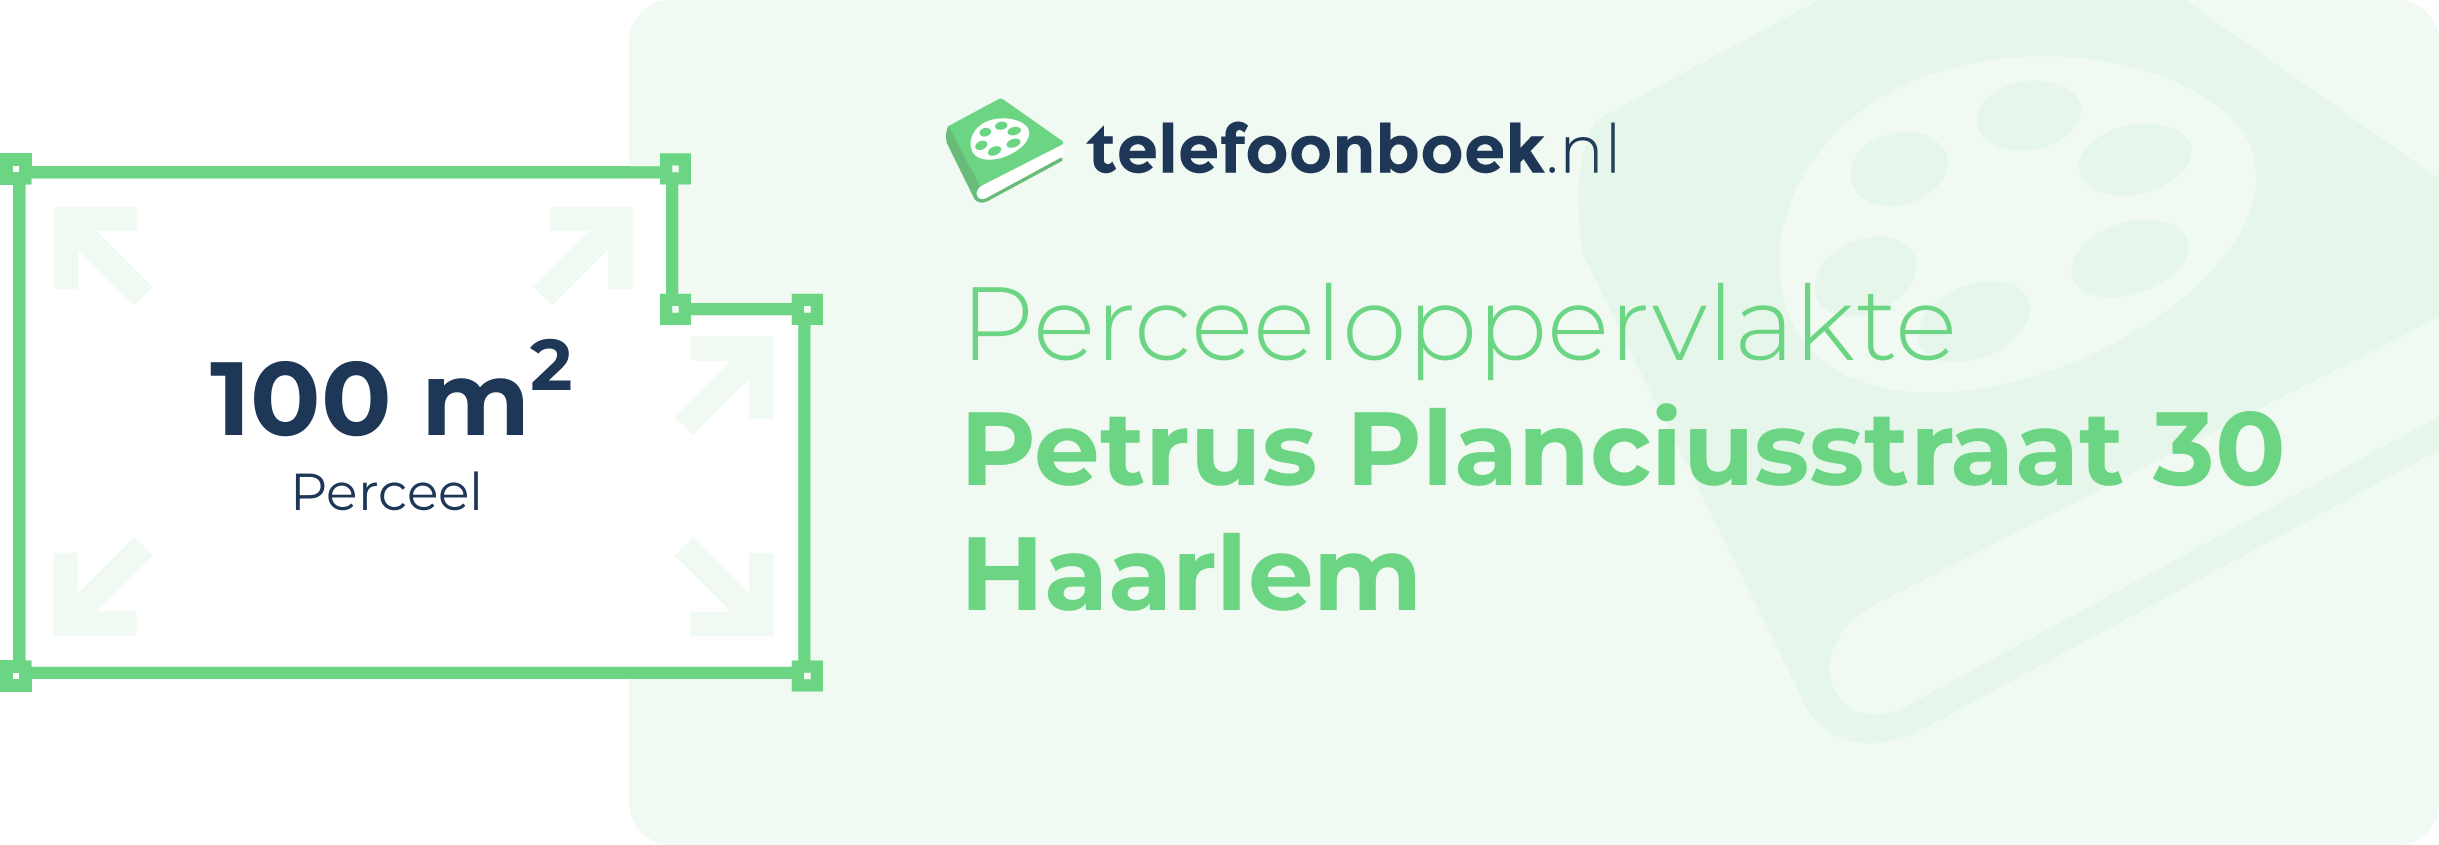 Perceeloppervlakte Petrus Planciusstraat 30 Haarlem